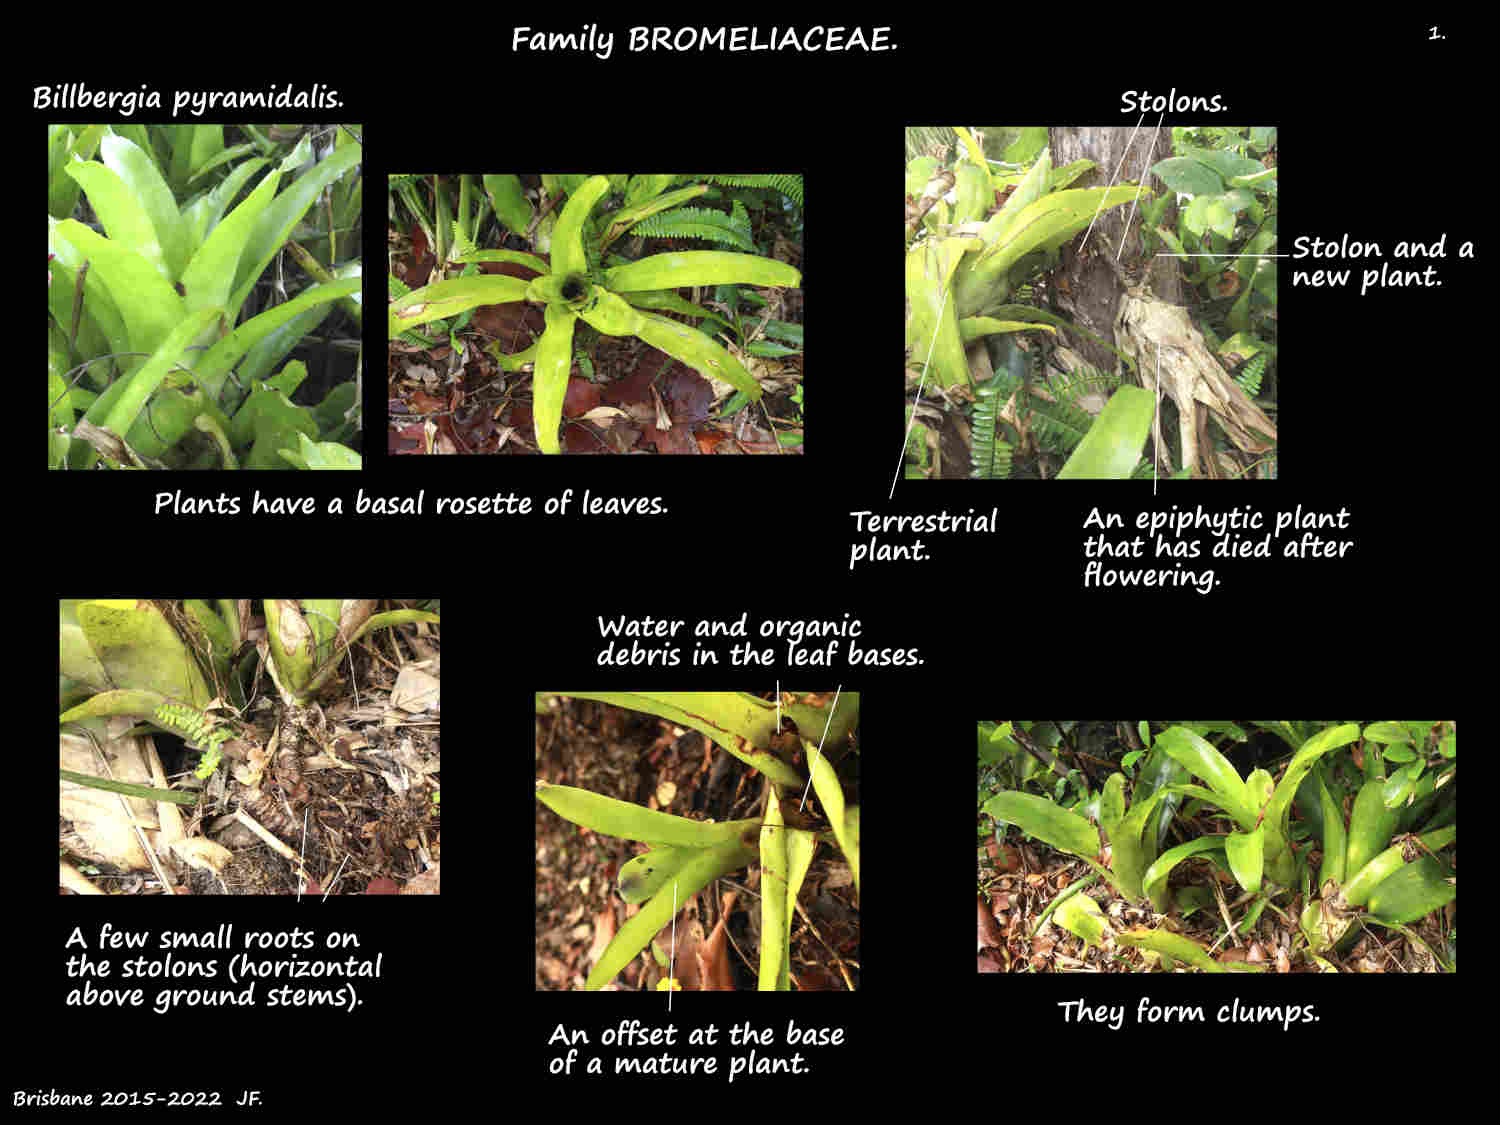 1 Billbergia pyramidalis plants & stolons